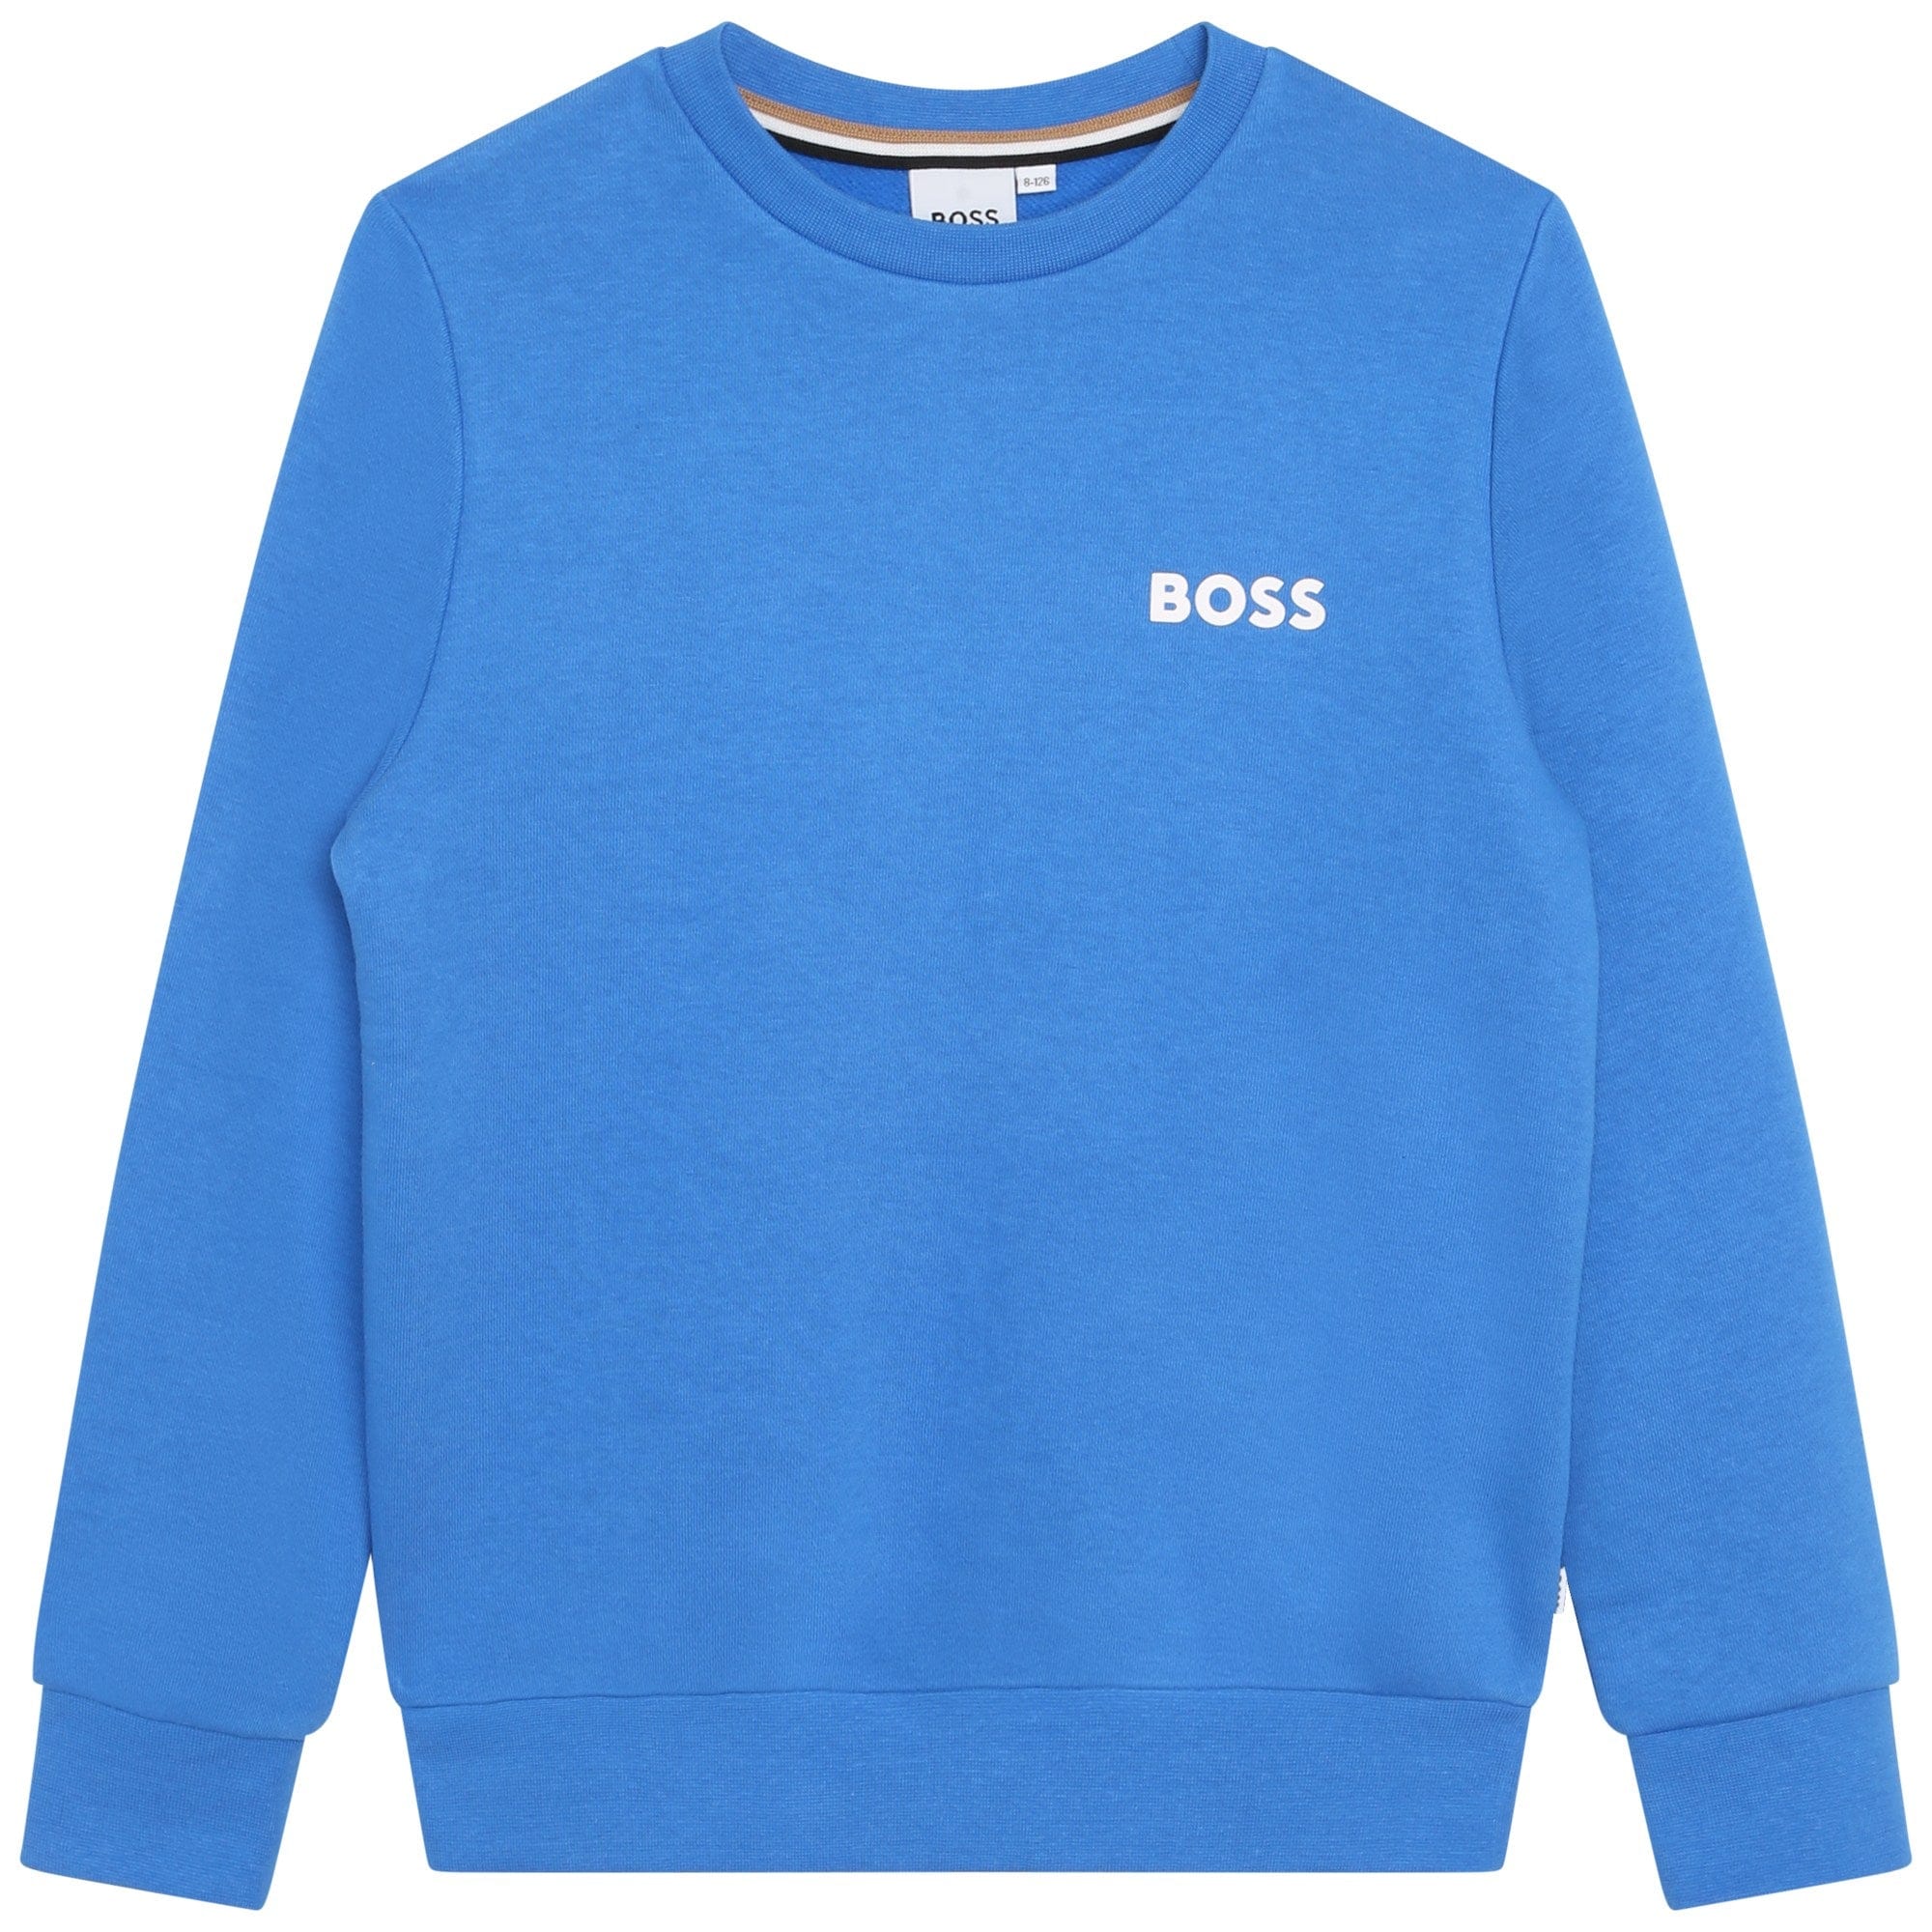 Boss Top J25Q12- 846  Boss Boys Navy Blue Essentiel Sweatshirt